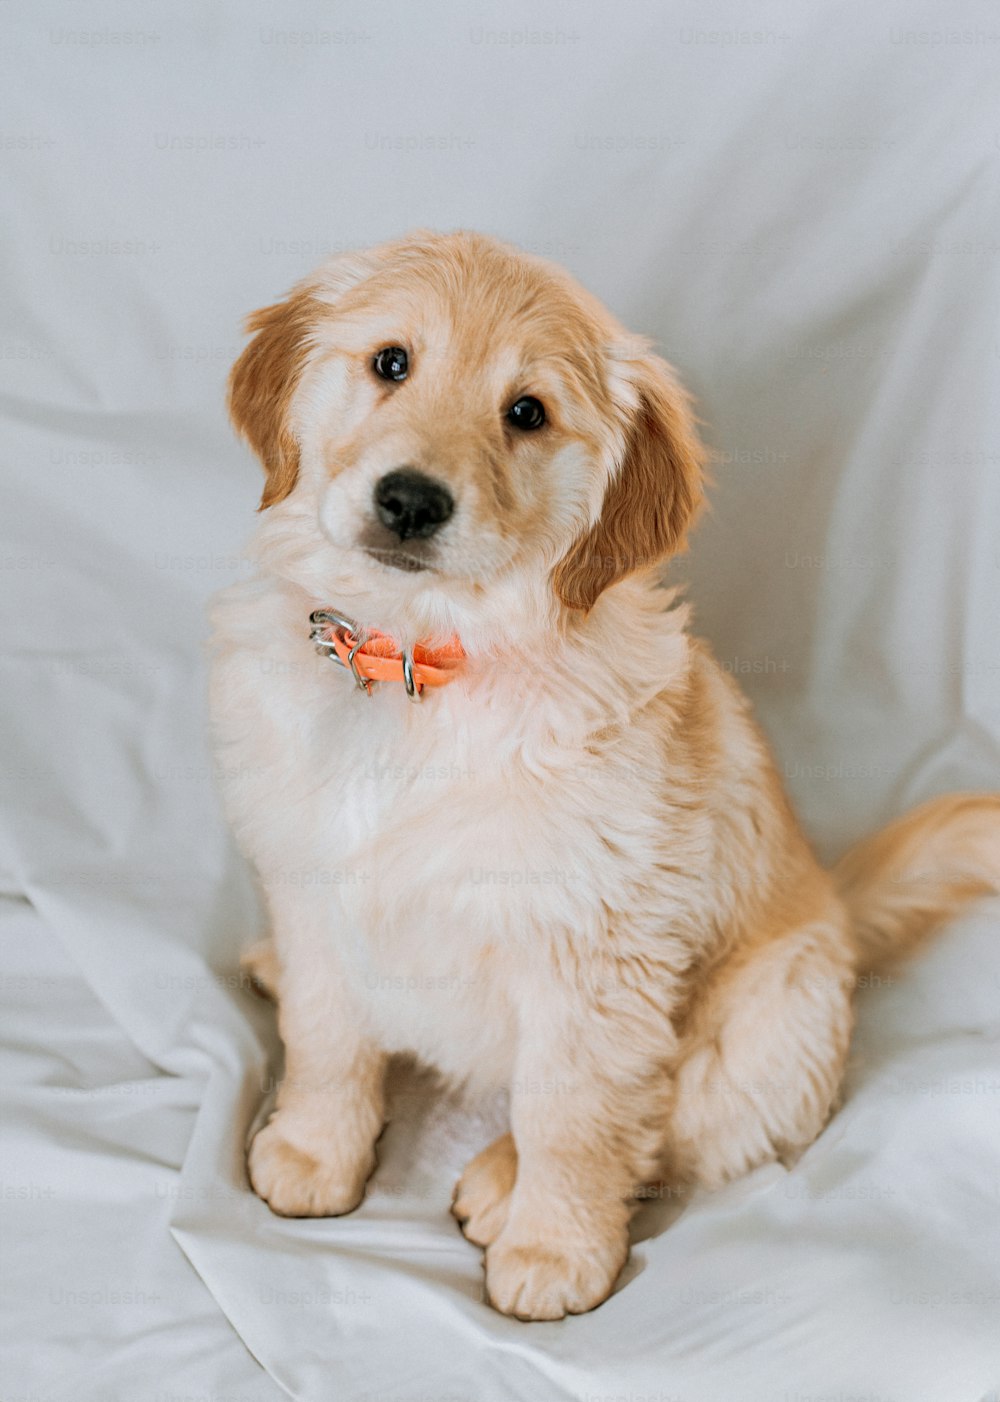 Golden Retriever Dog Pictures  Download Free Images on Unsplash